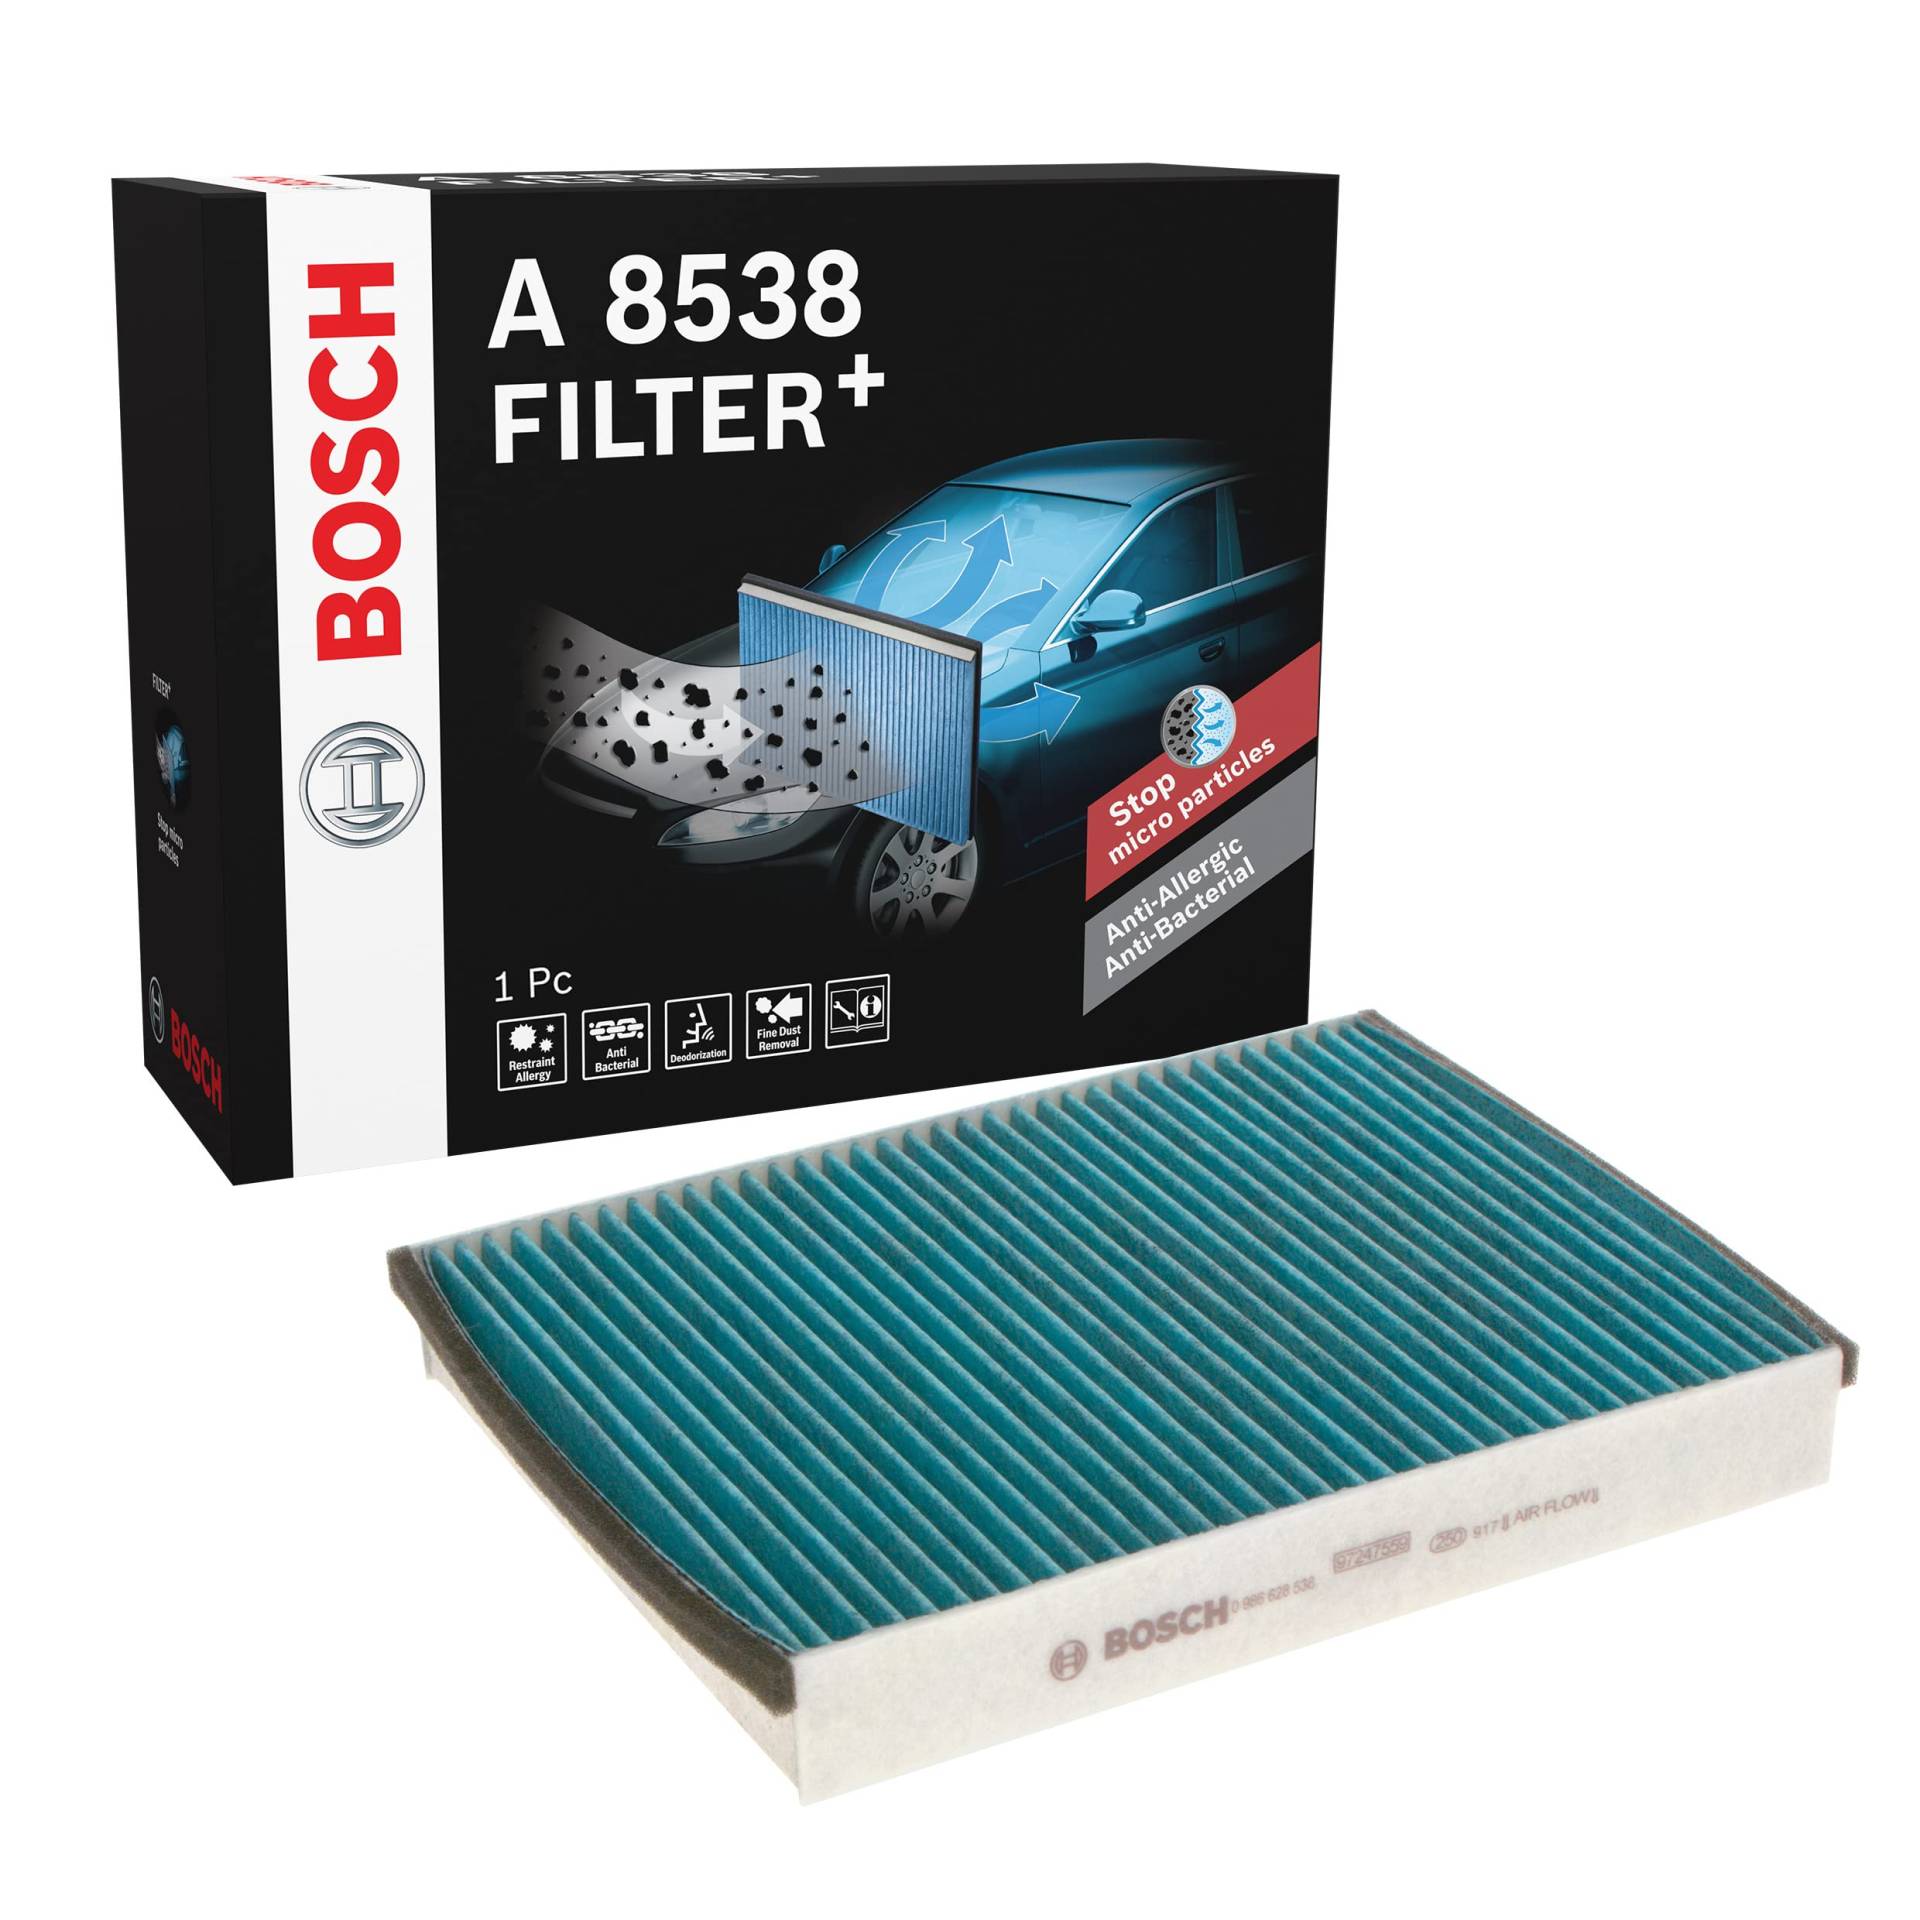 Bosch A8538 - Innenraumfilter Filter+ von Bosch Automotive